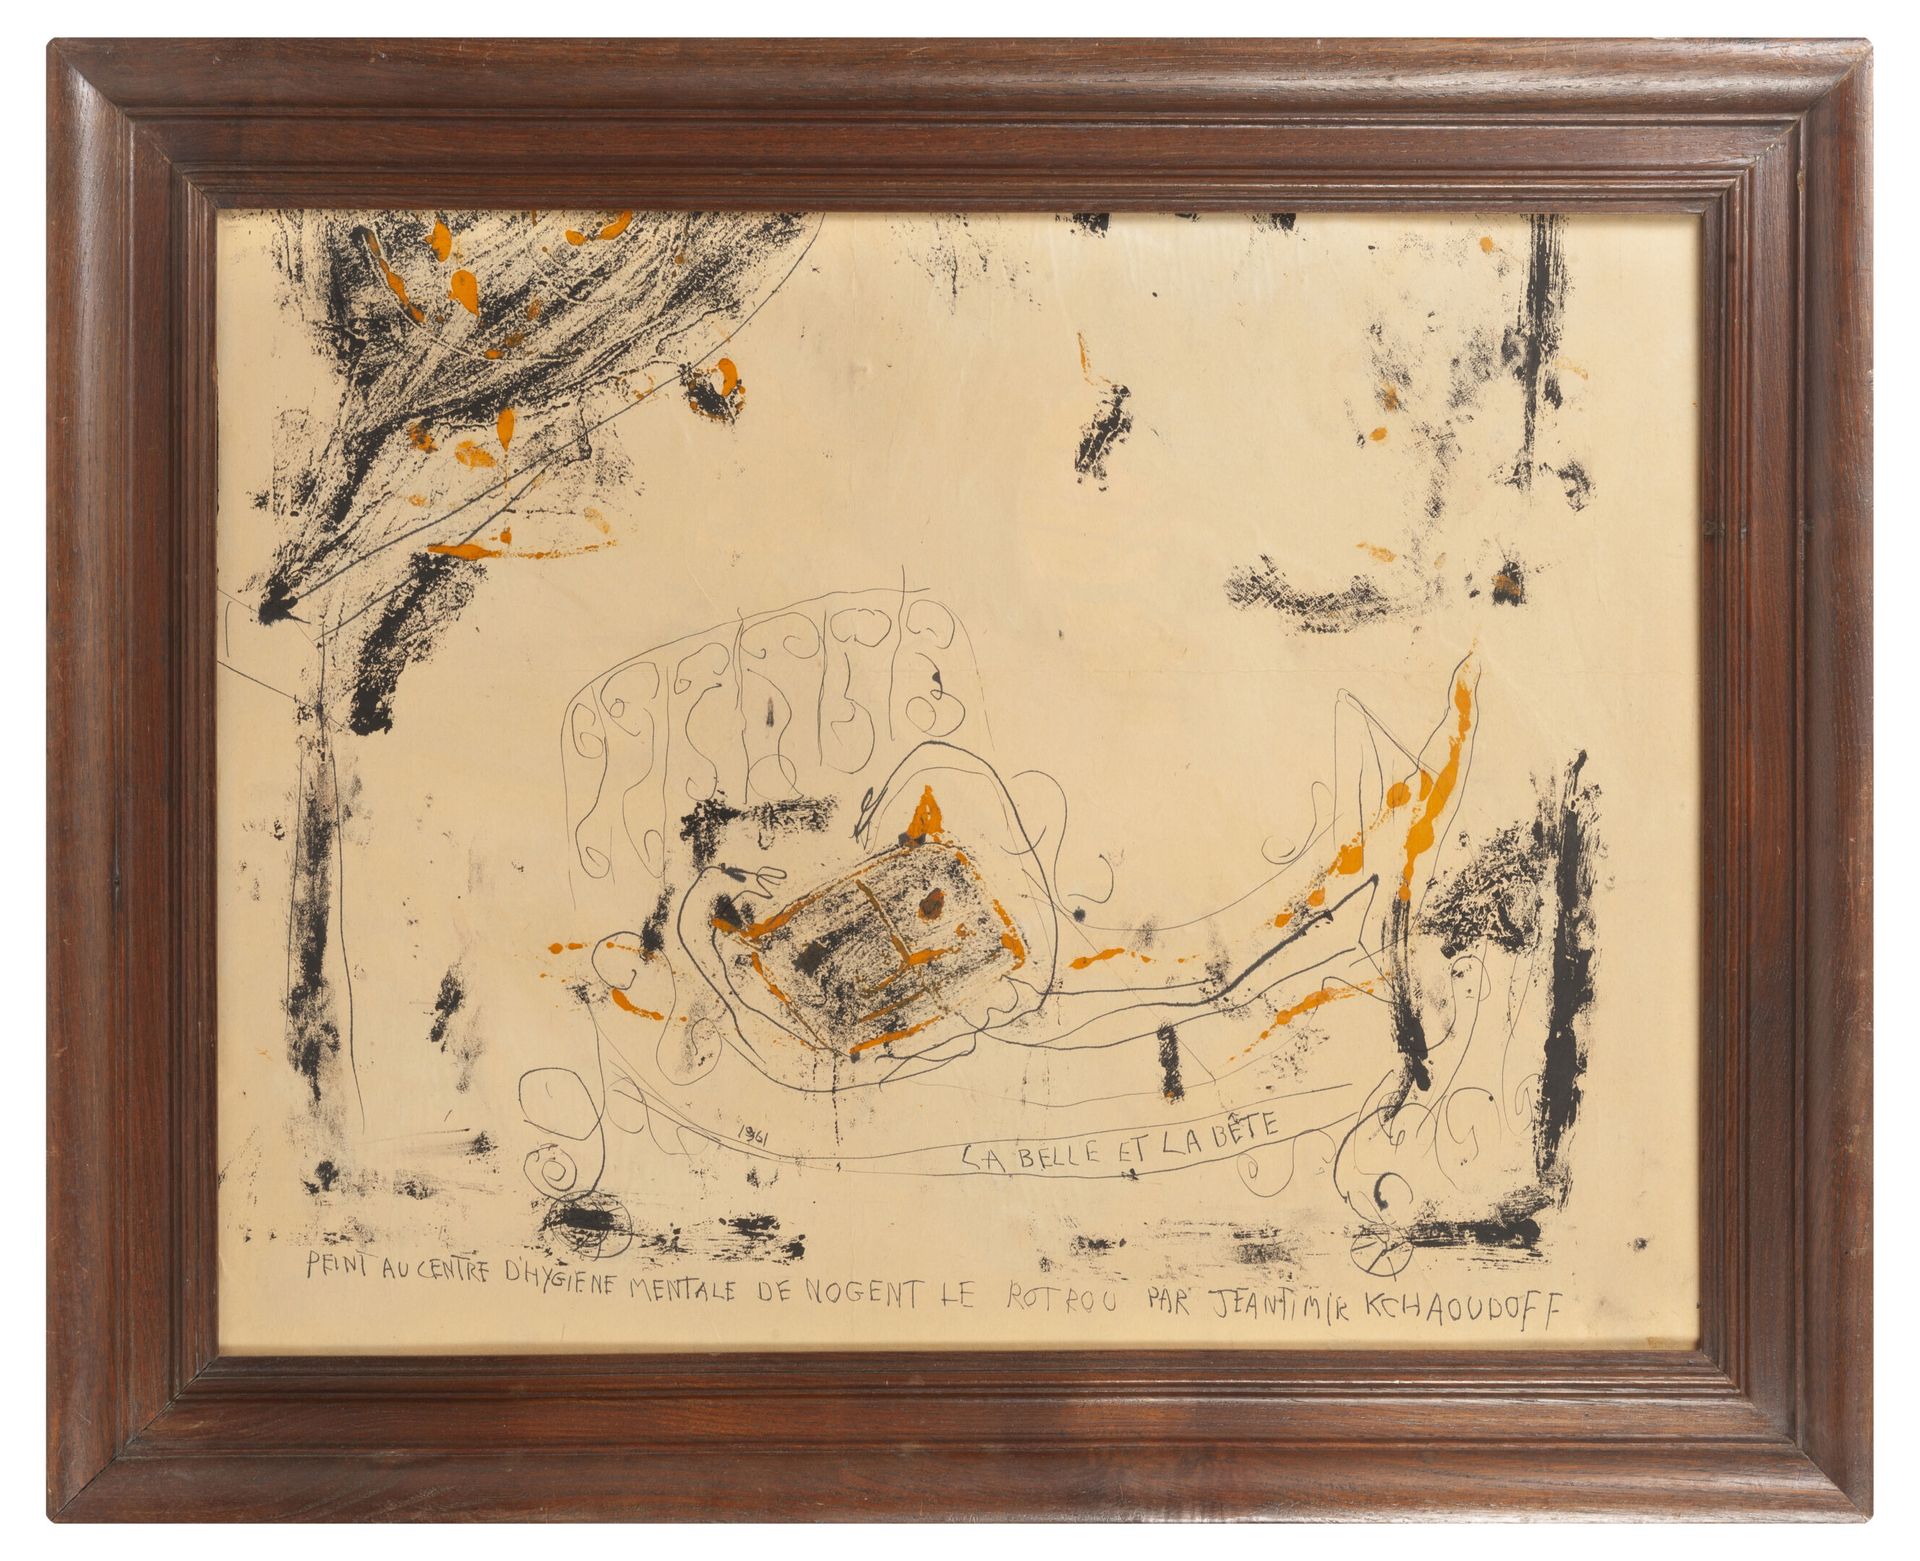 Jeantimir Kchaoudoff (1941-2017) 美女与野兽》，1961年。

纸上水墨和水粉画，装在纸板上。

底部中央有标题和注释 "Jea&hellip;